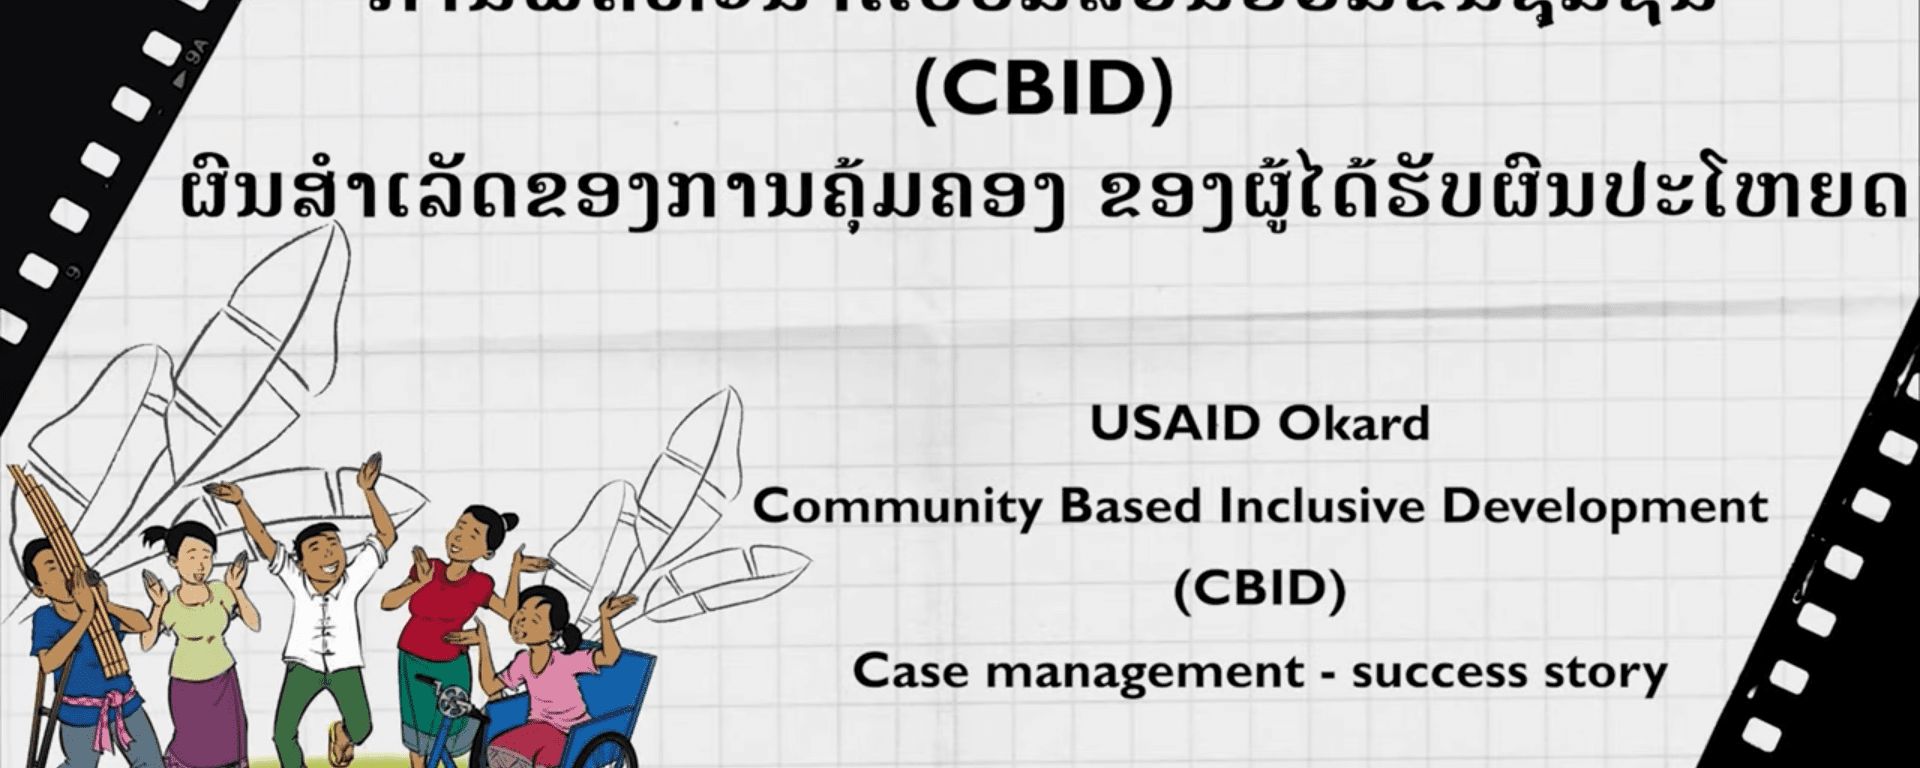 CBID Success story - Khamkeo with subtitle